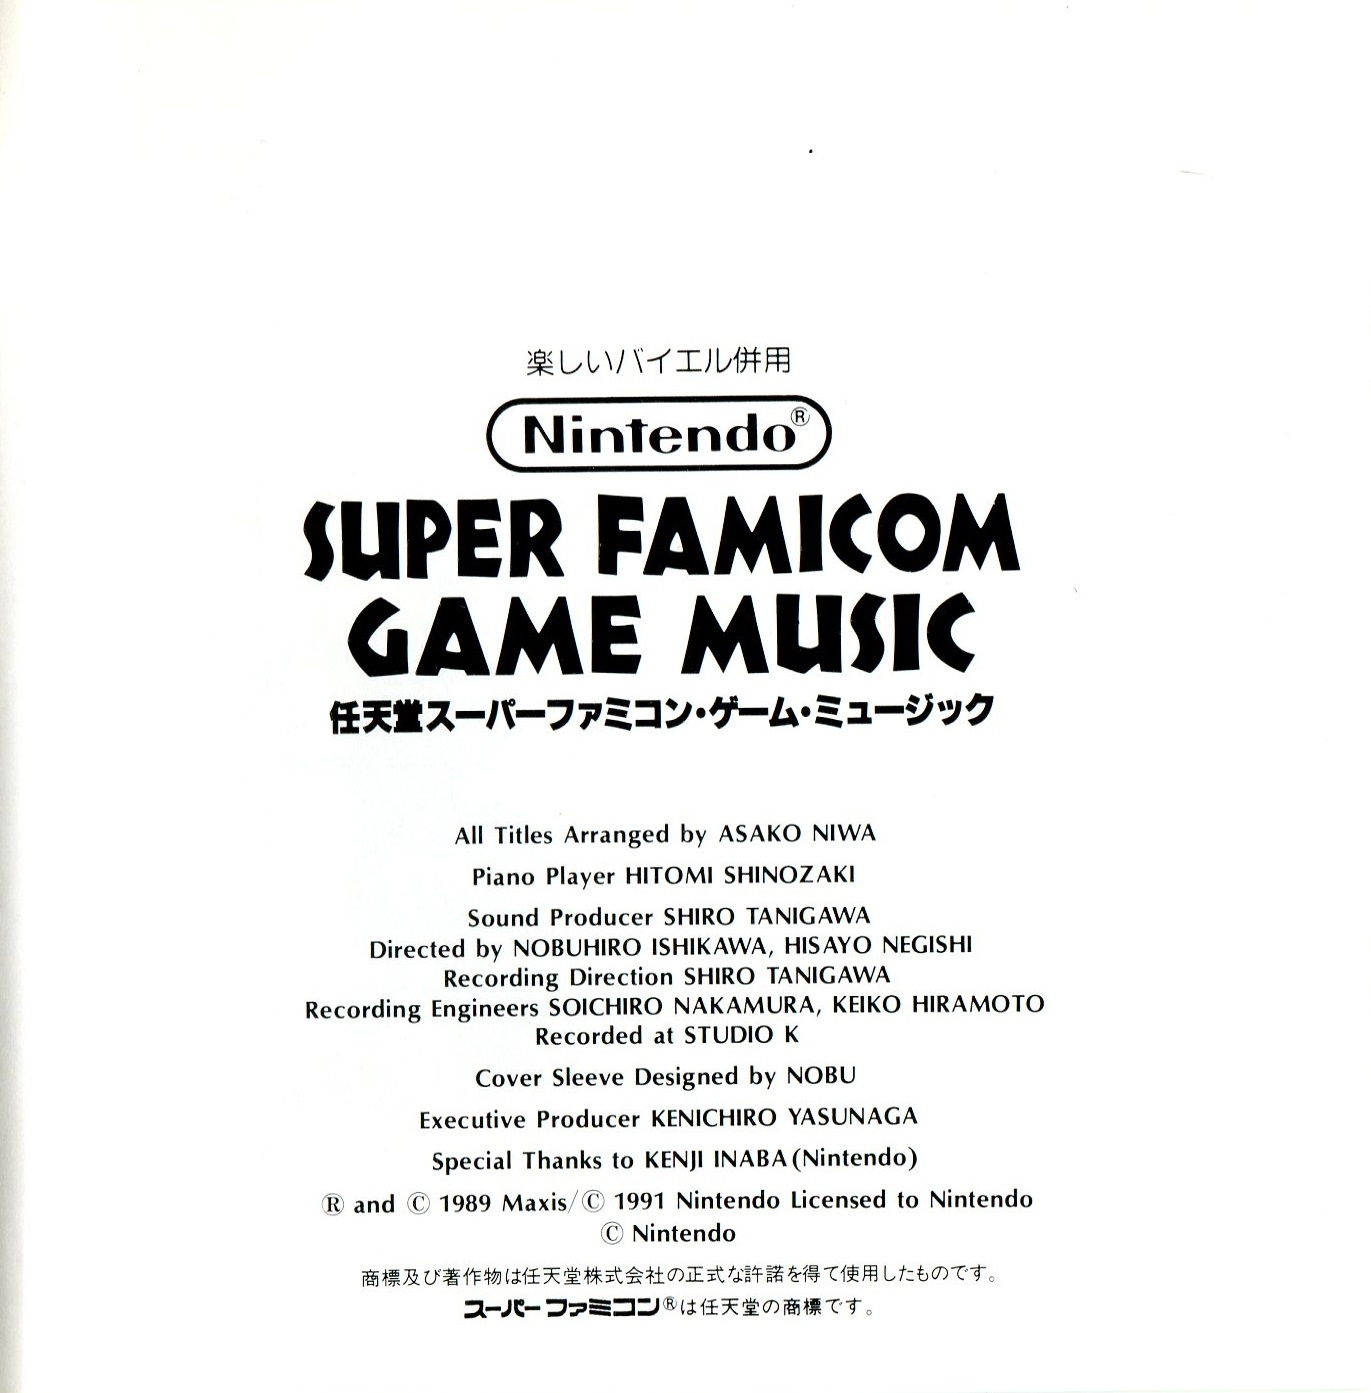 Tanoshii Beyer Heiyou Nintendo Super Famicom Game Music (1993) MP3 -  Download Tanoshii Beyer Heiyou Nintendo Super Famicom Game Music (1993)  Soundtracks for FREE!